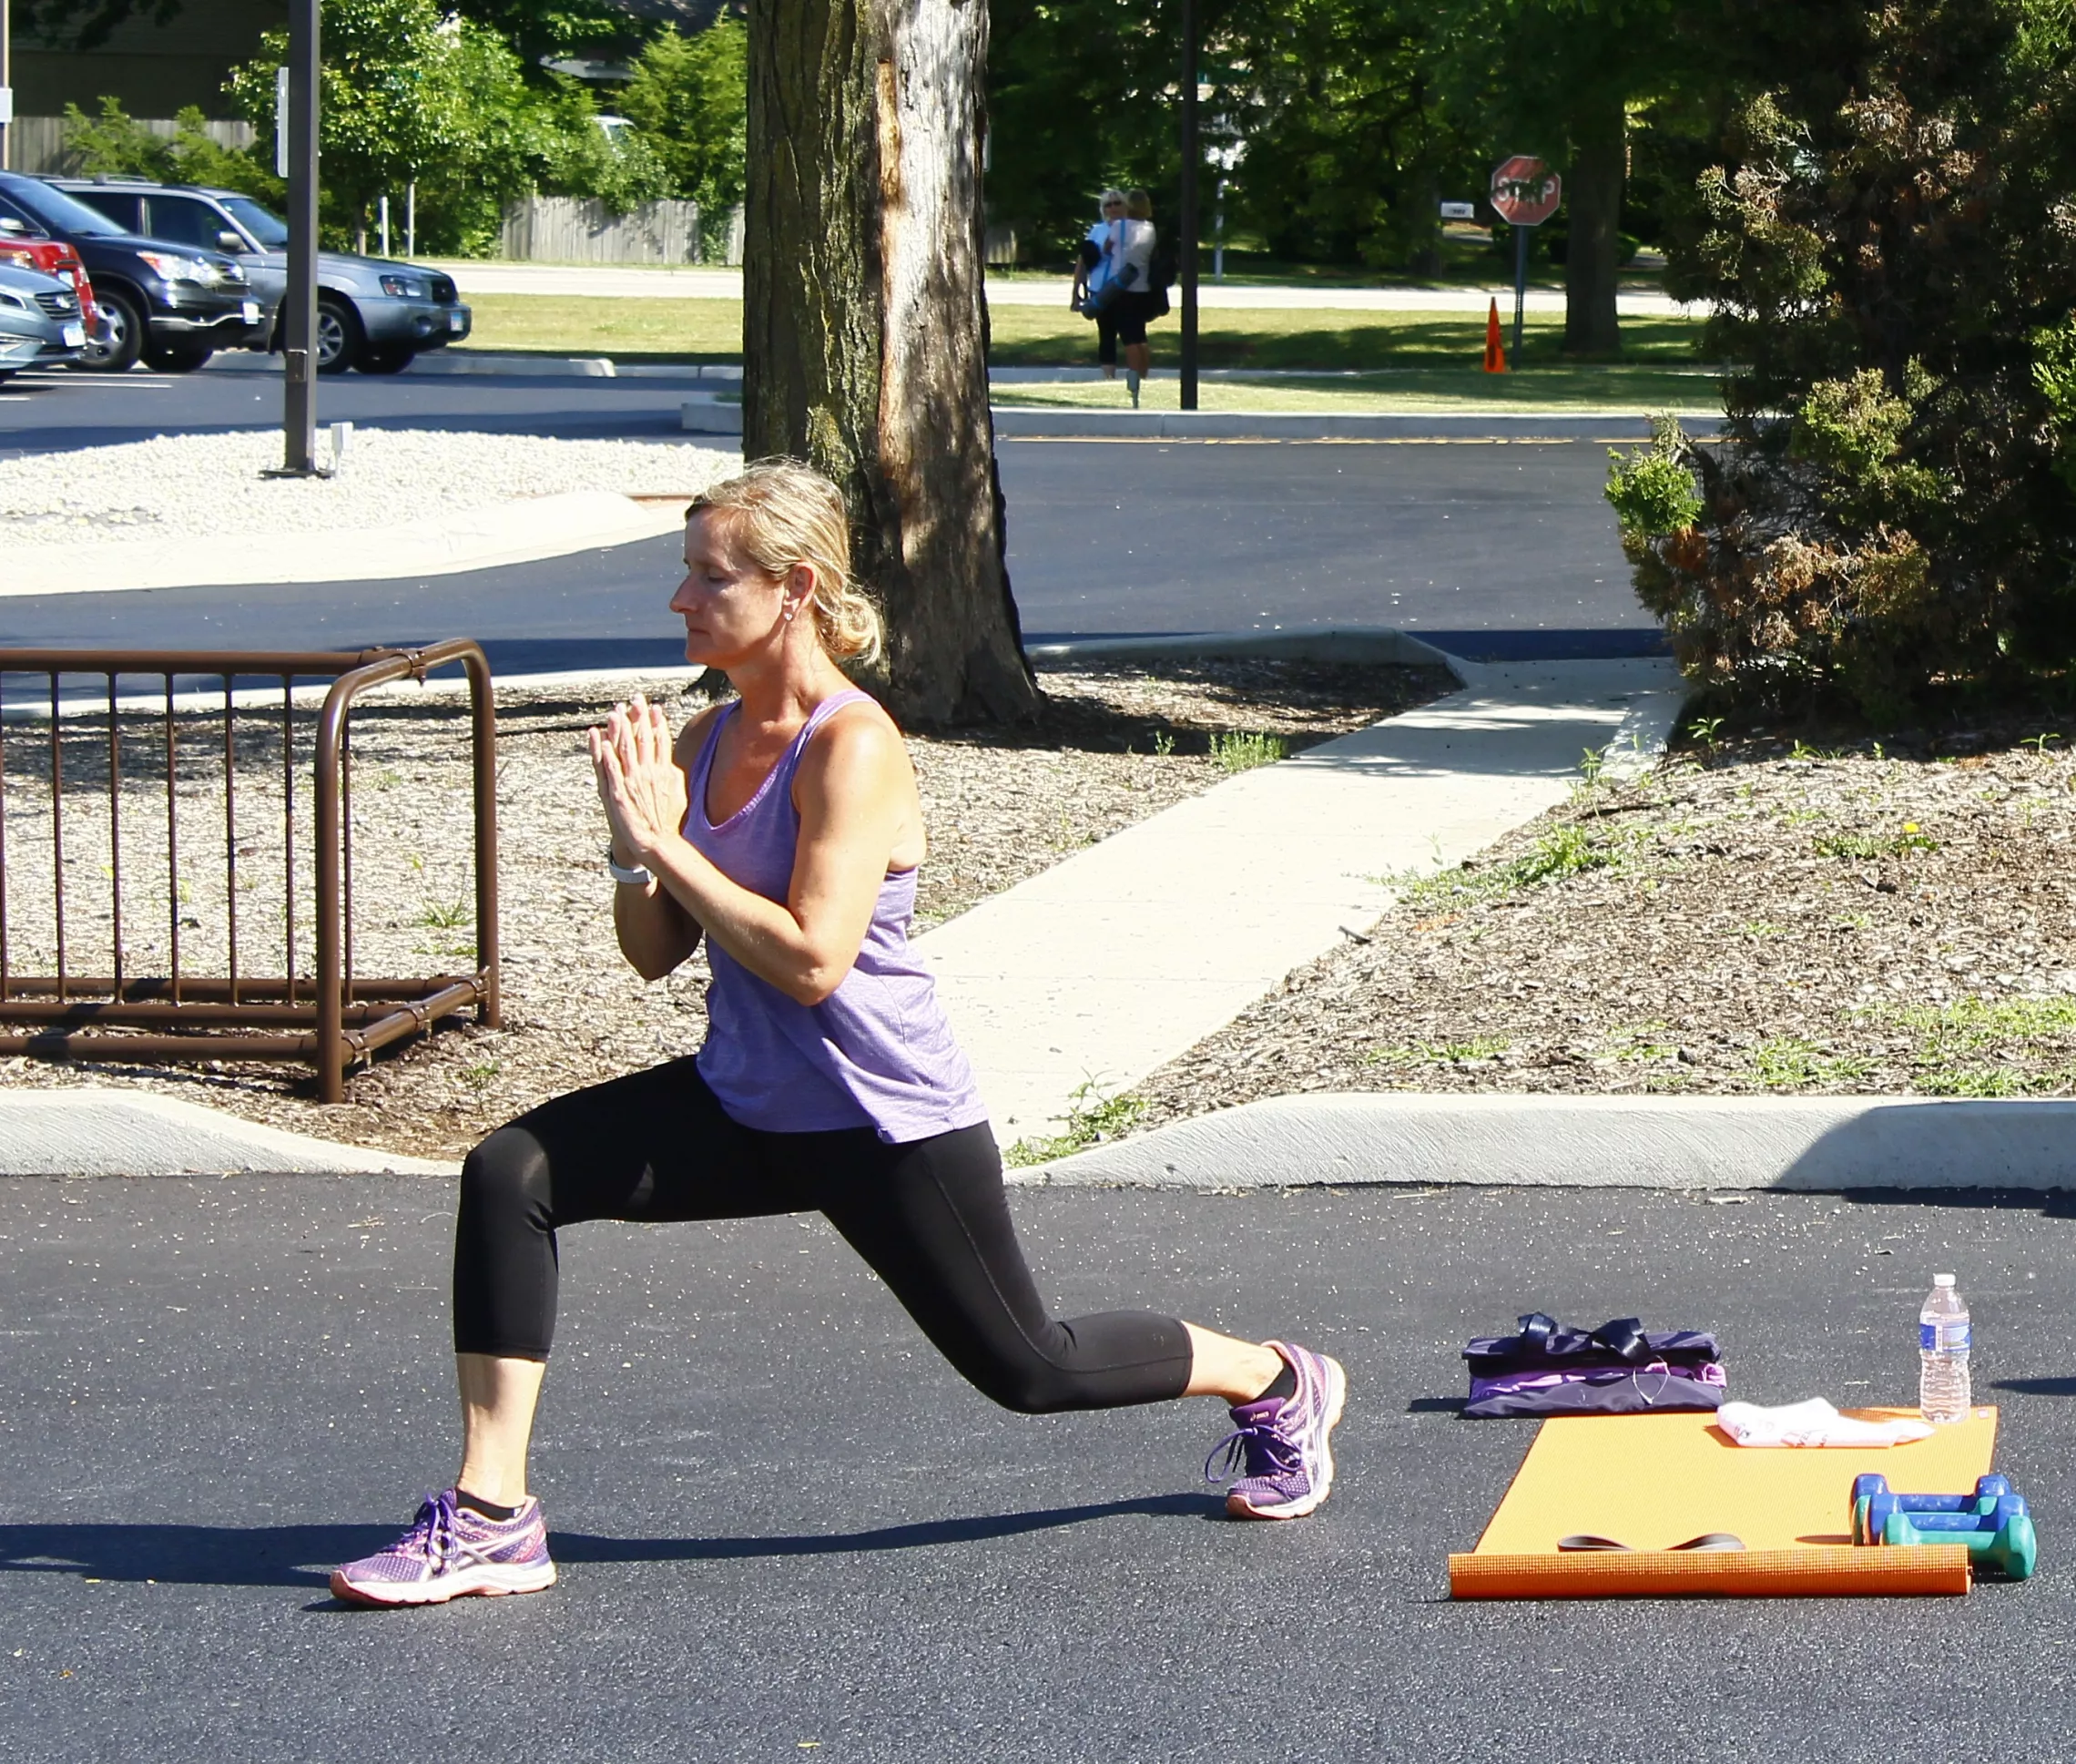 Small group exercise image. Woman doing yoga outside